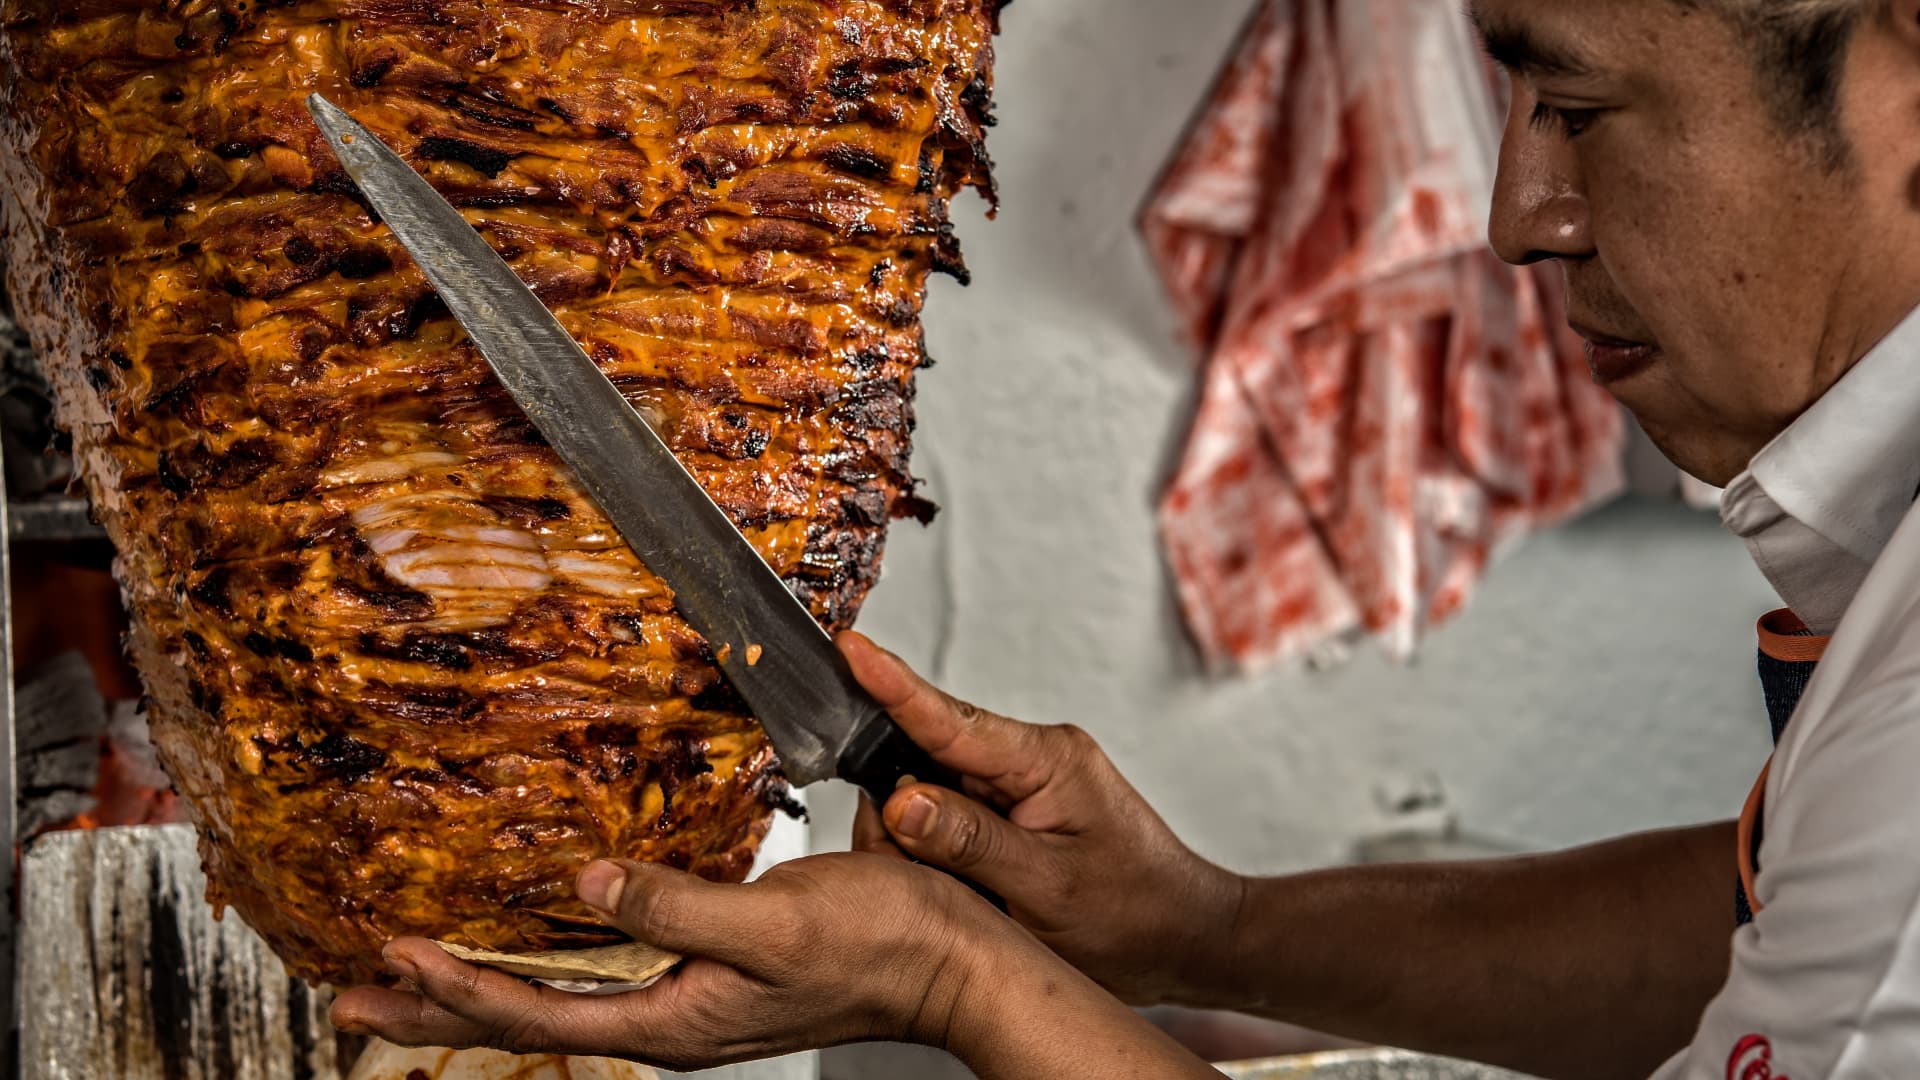 Marinated pork is sliced to prepare a plate of tacos al pastor at El Tizoncito restaurant in Mexico City.